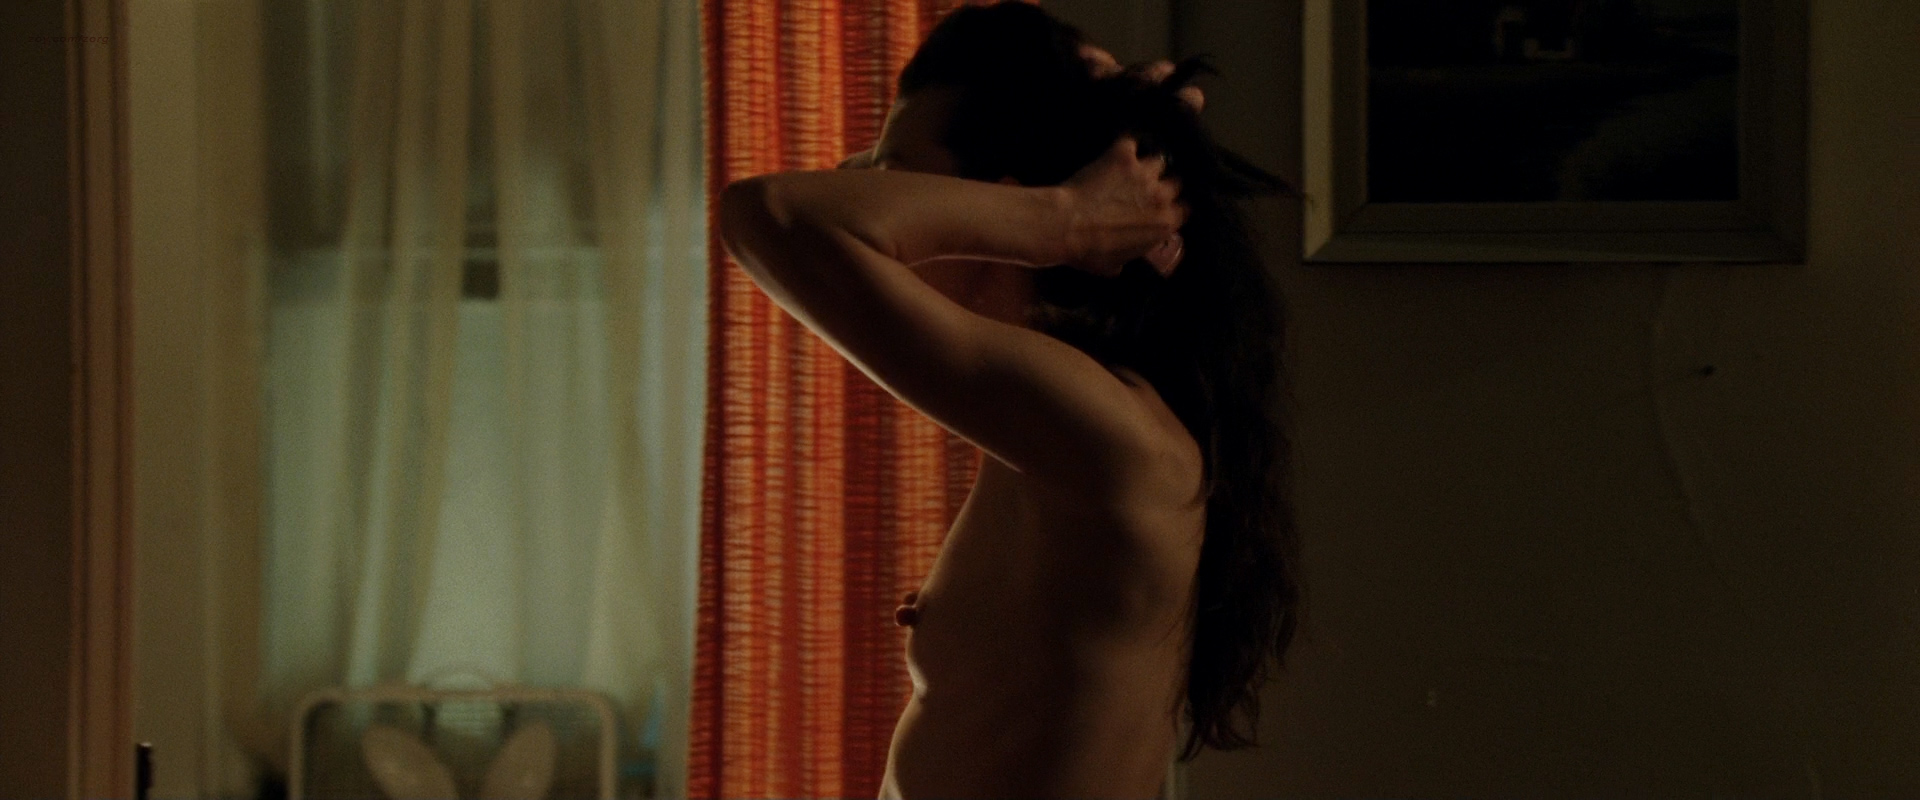 https://www.zorg.video/wp-content/uploads/2011/01/Milla-Jovovich-nude-tople...